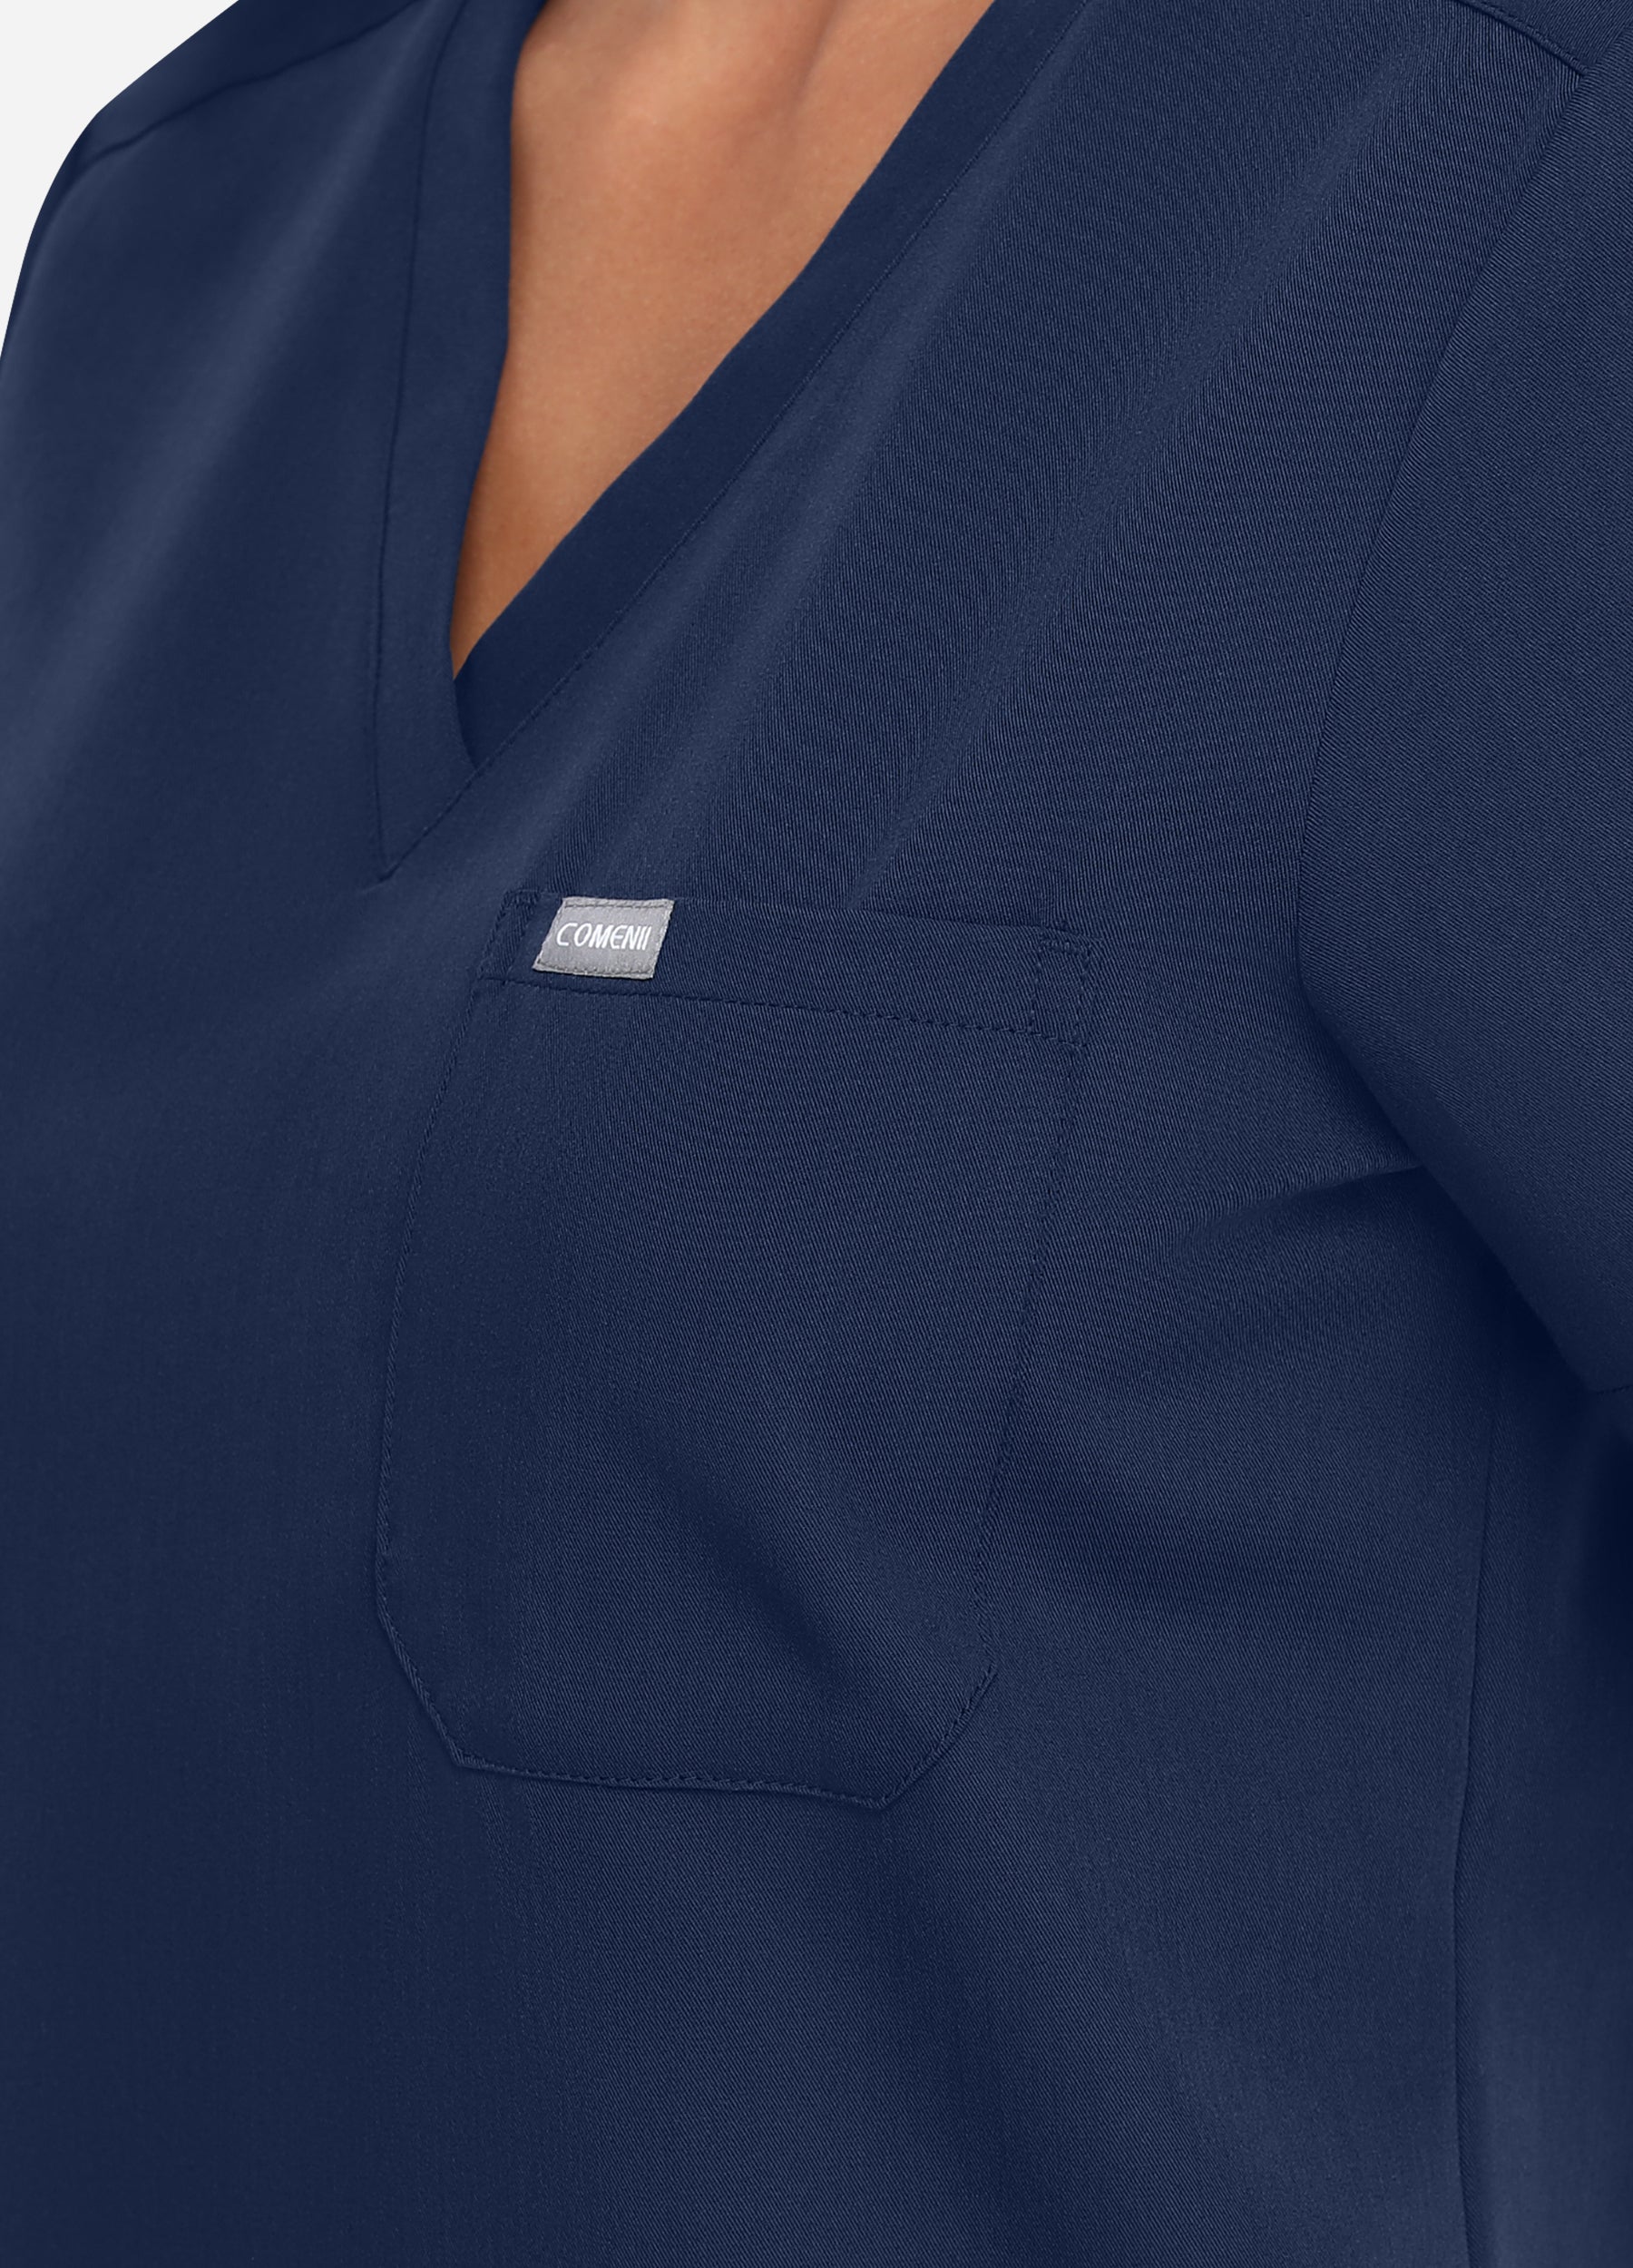 Blusa médica moderna con 1 bolsillo para mujer